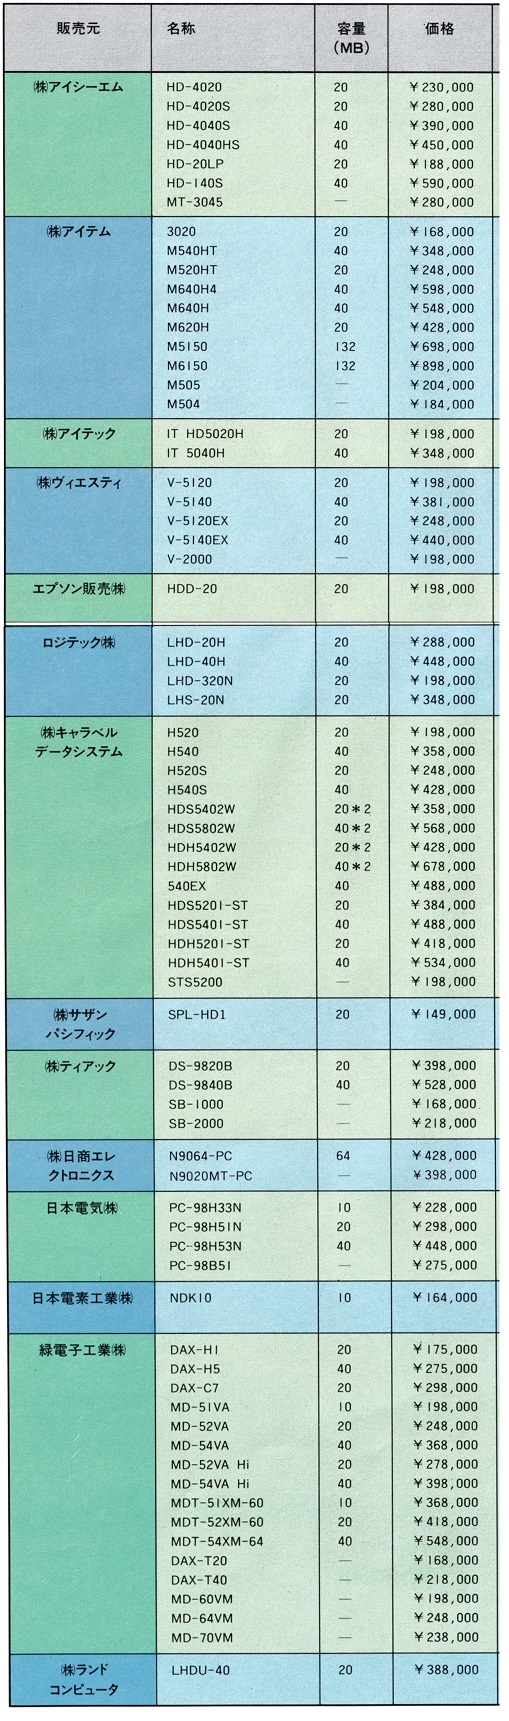 ASCII1987(06)c05特集HDD価格_W509.jpg